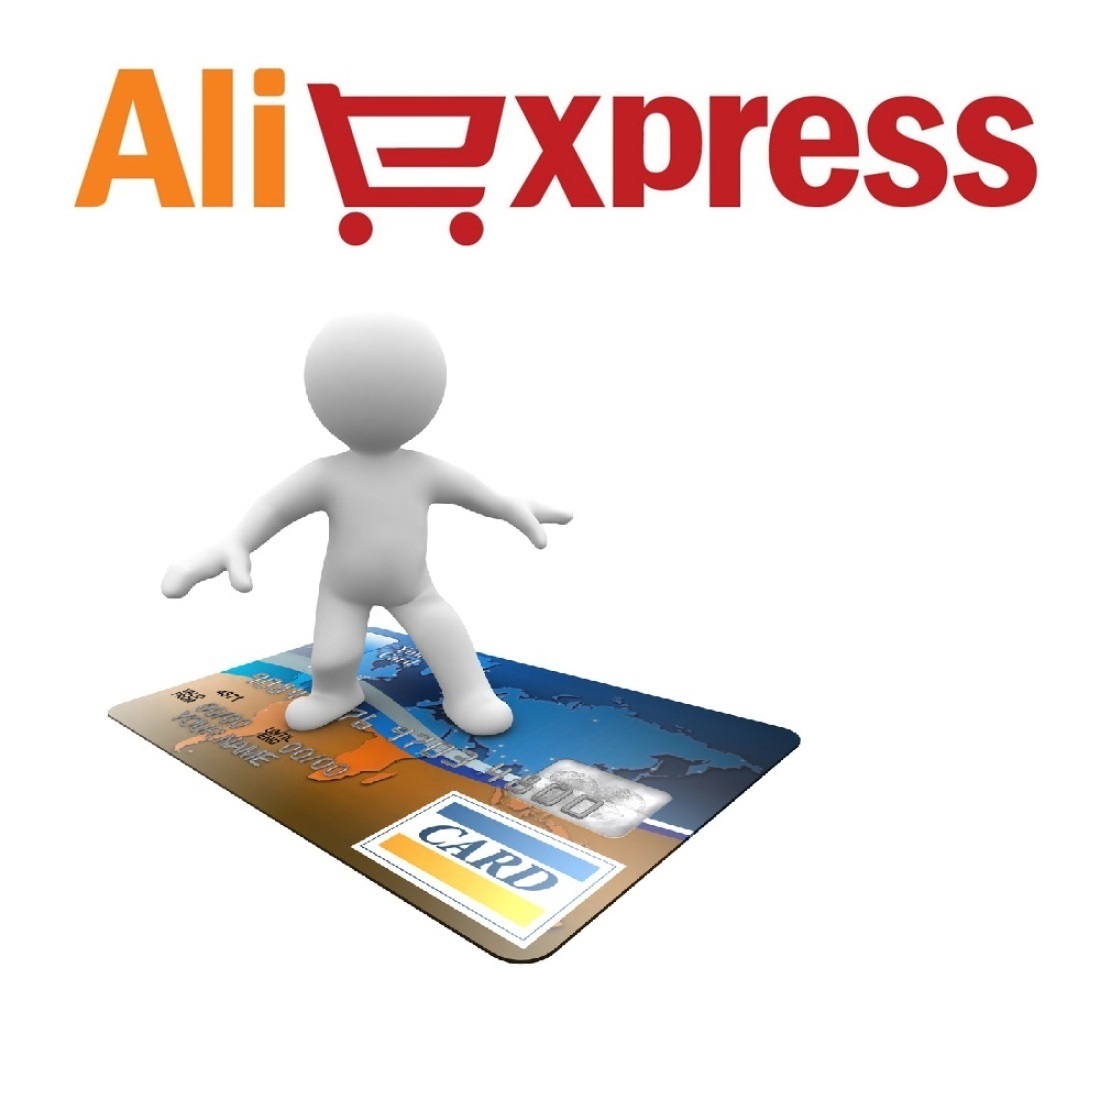 menyaem-kartu-oplaty-na-sajte-aliexpress-21